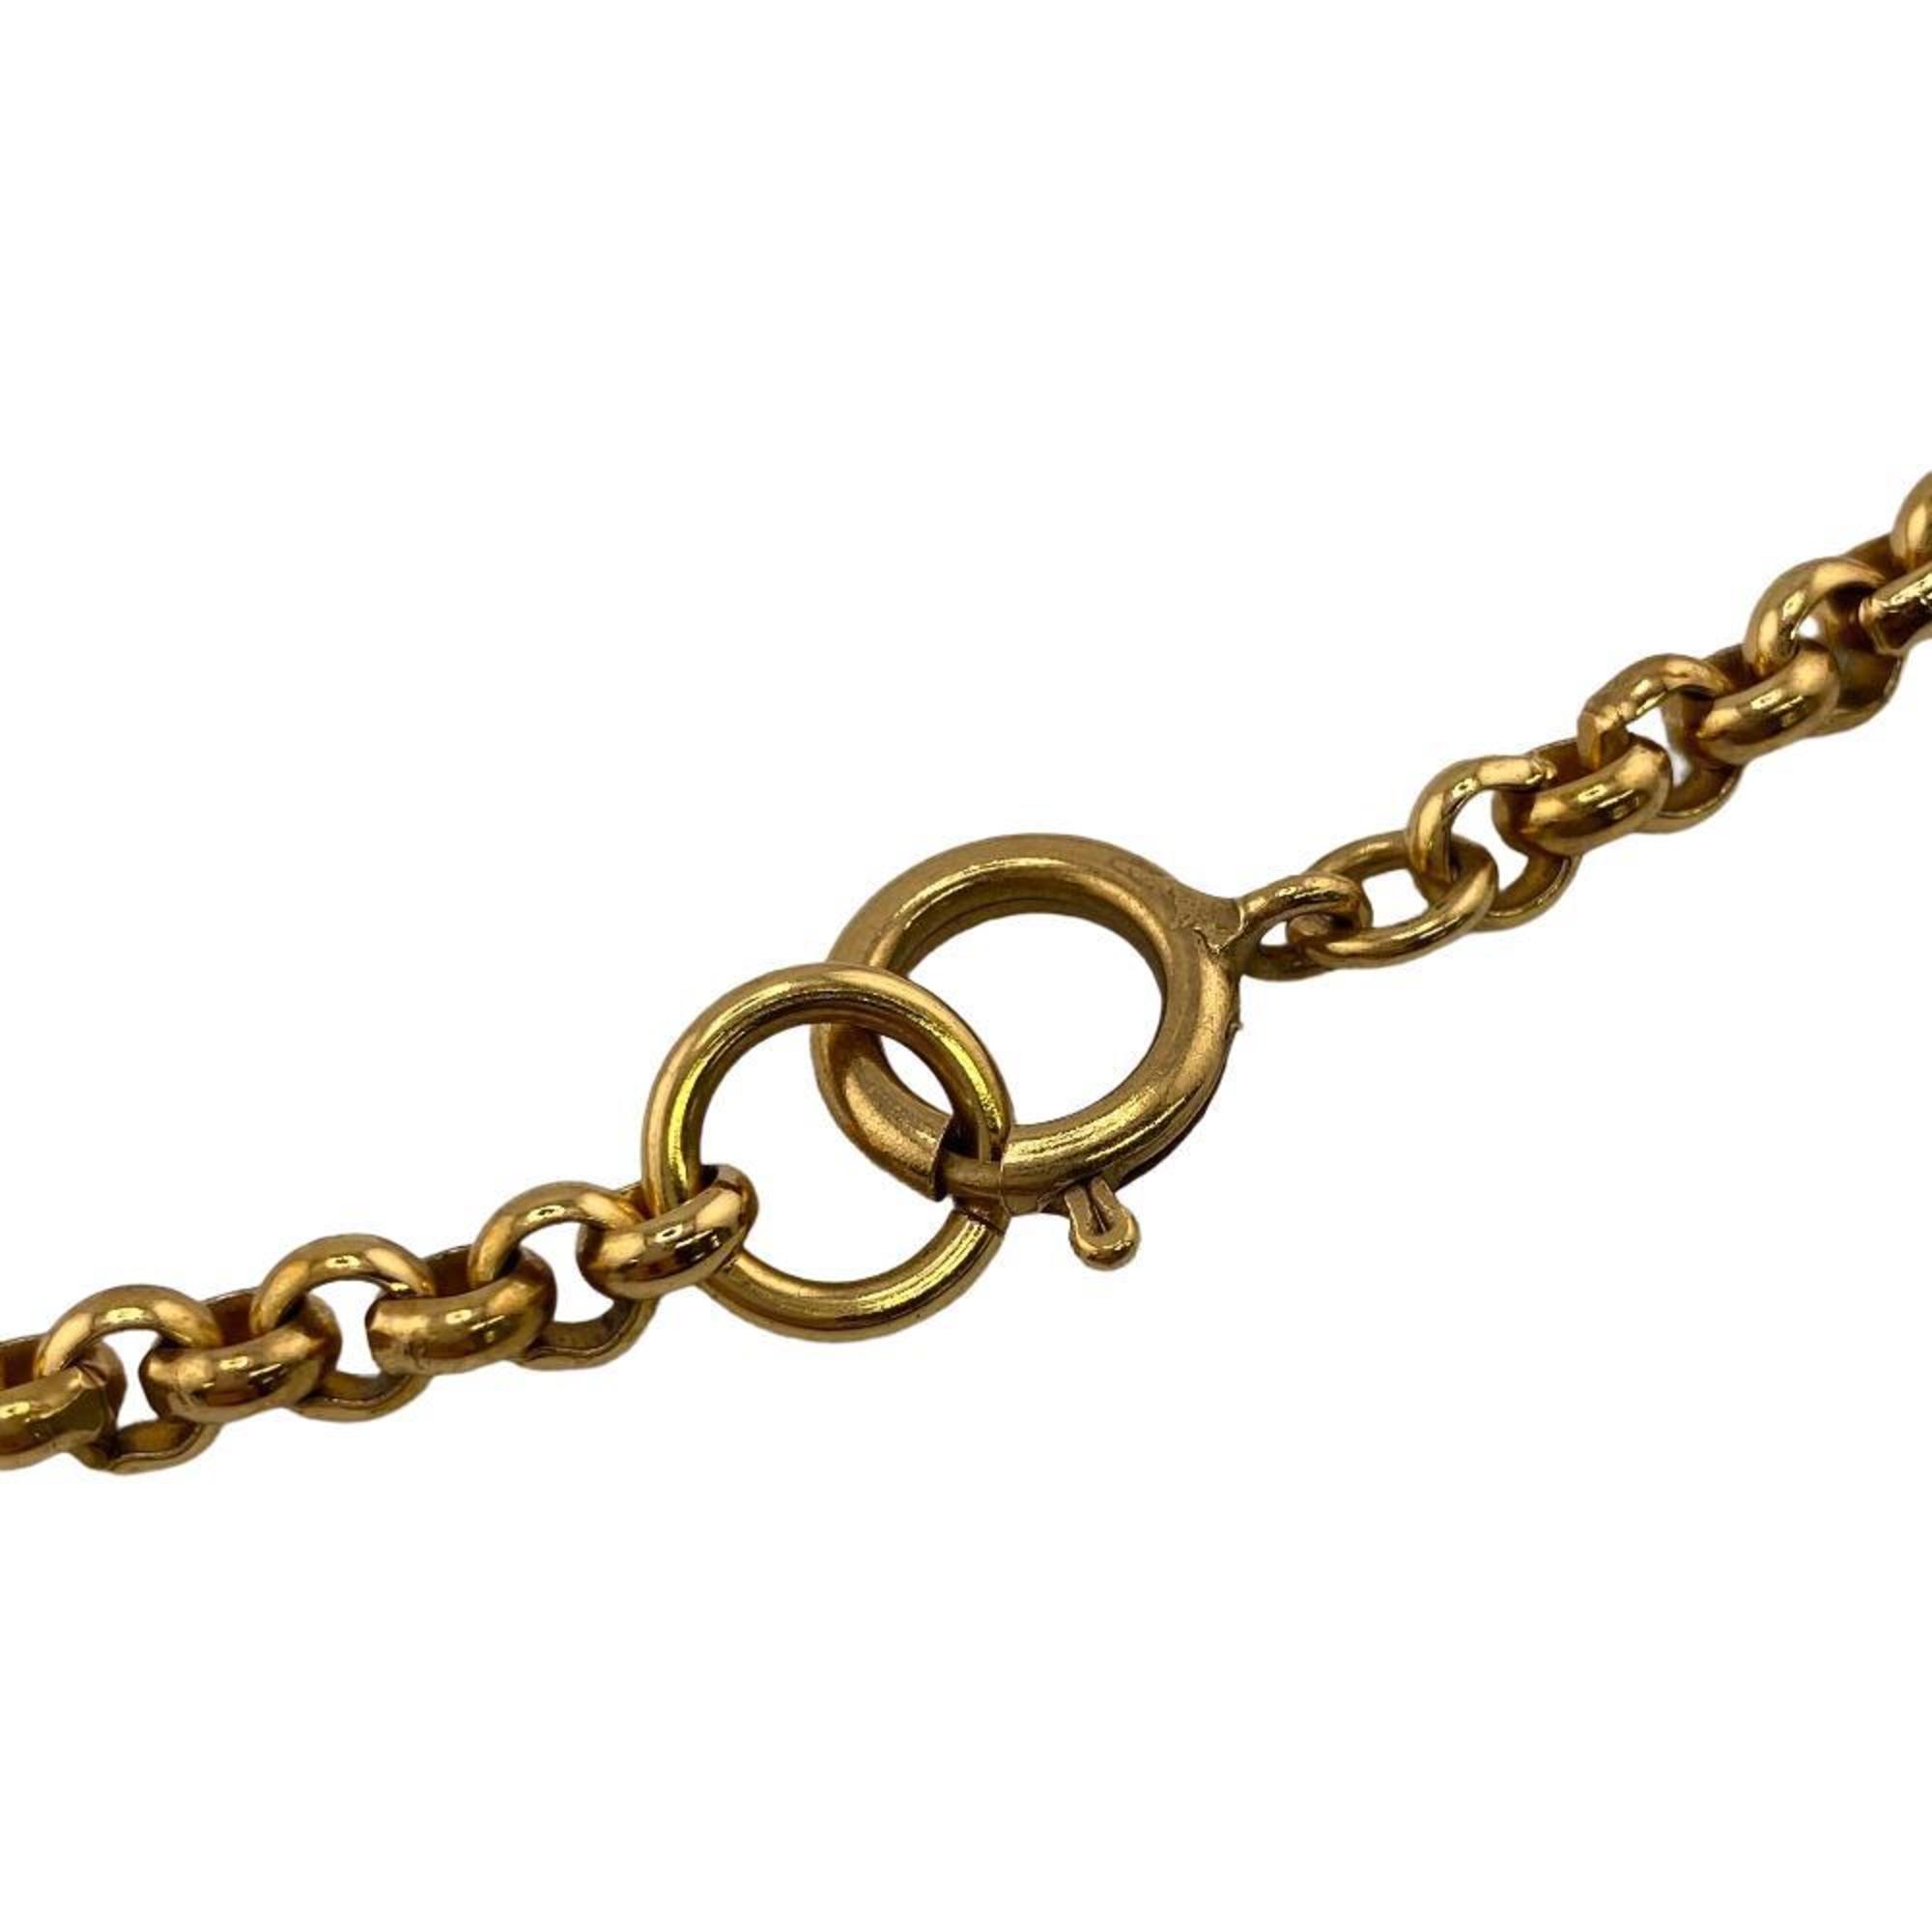 CHANEL 95P Chain Coco Mark Heart Necklace Gold Women's